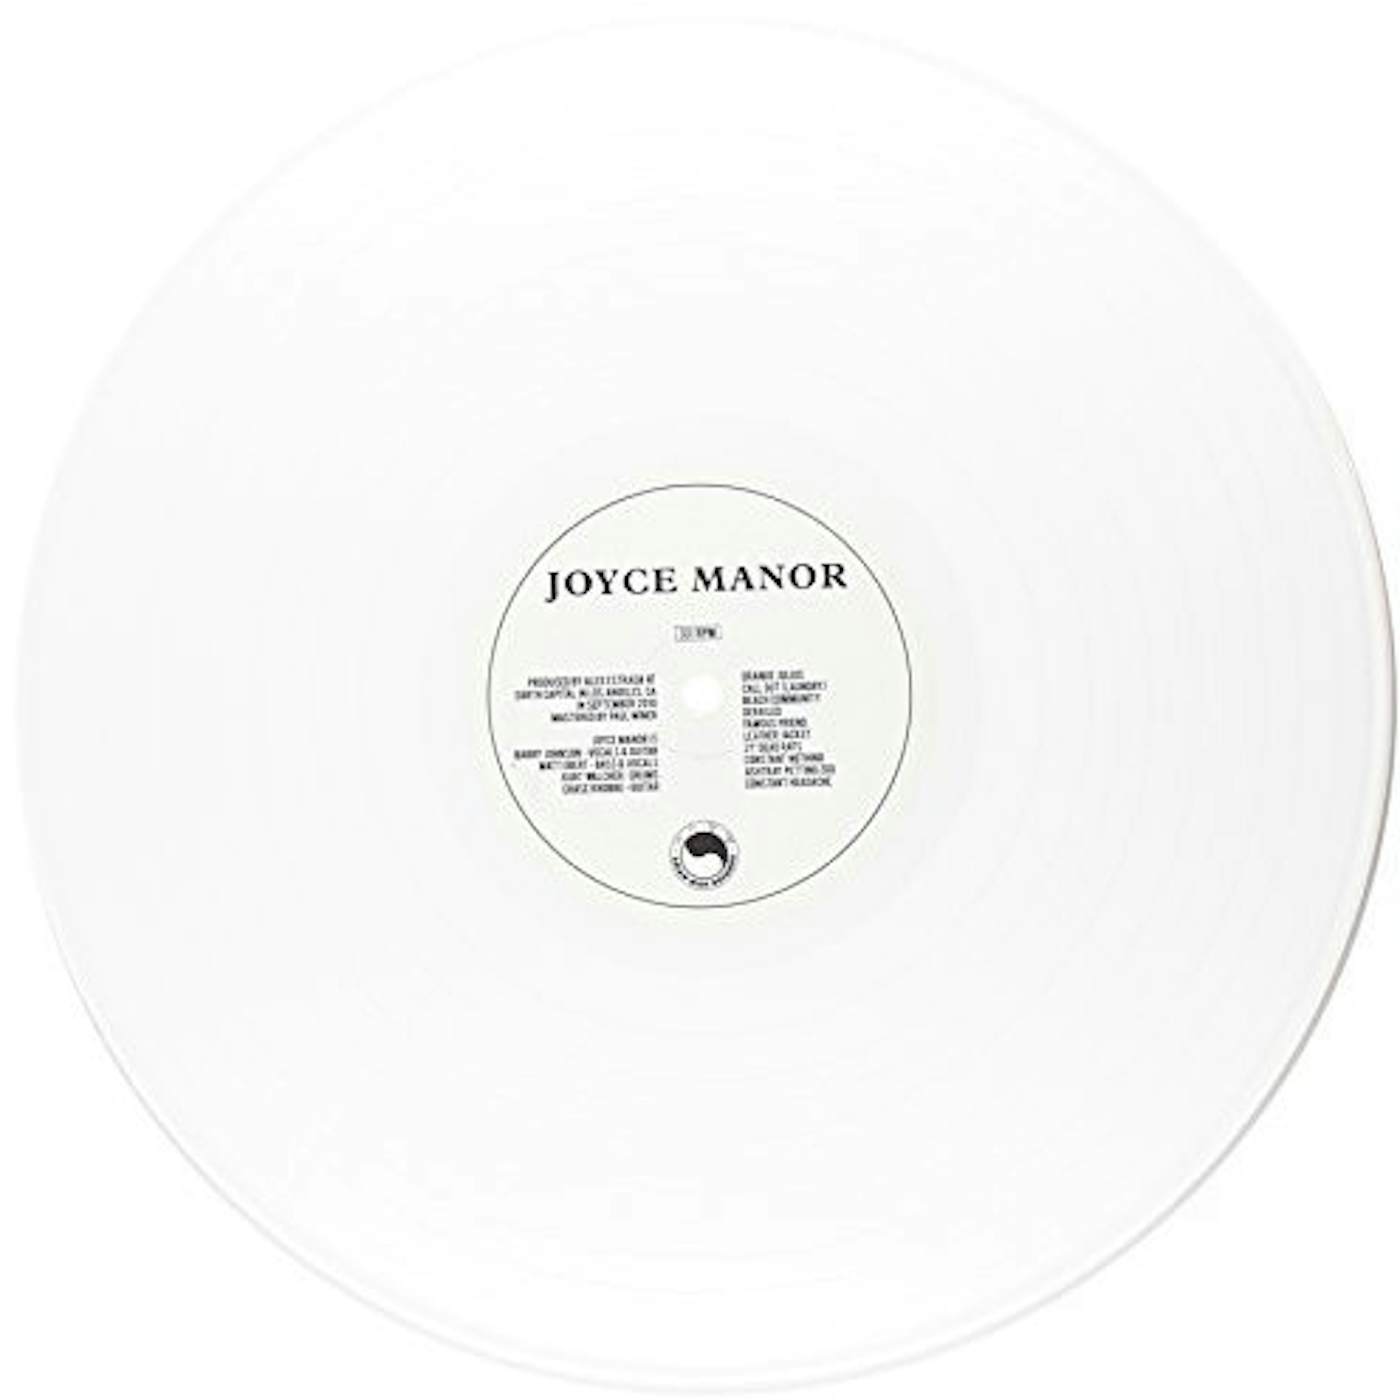 JOYCE MANOR Vinyl Record